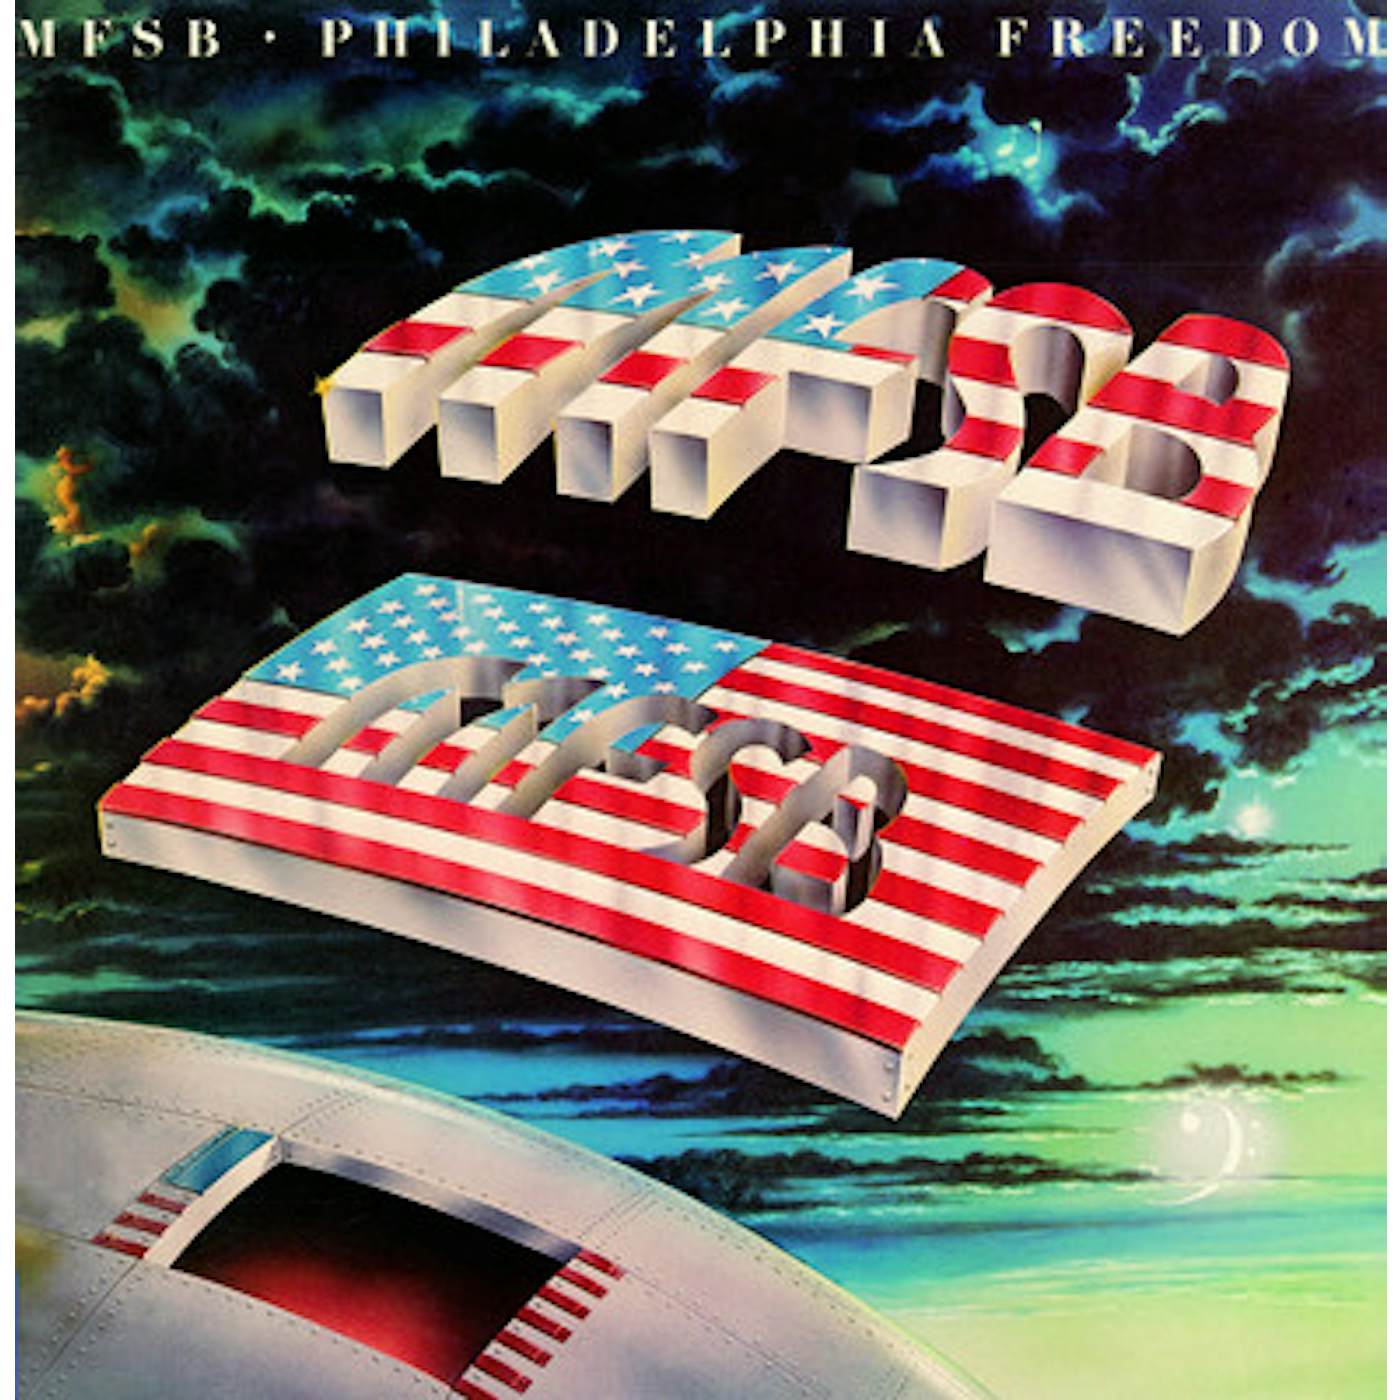 MFSB PHILADELPHIA FREEDOM CD